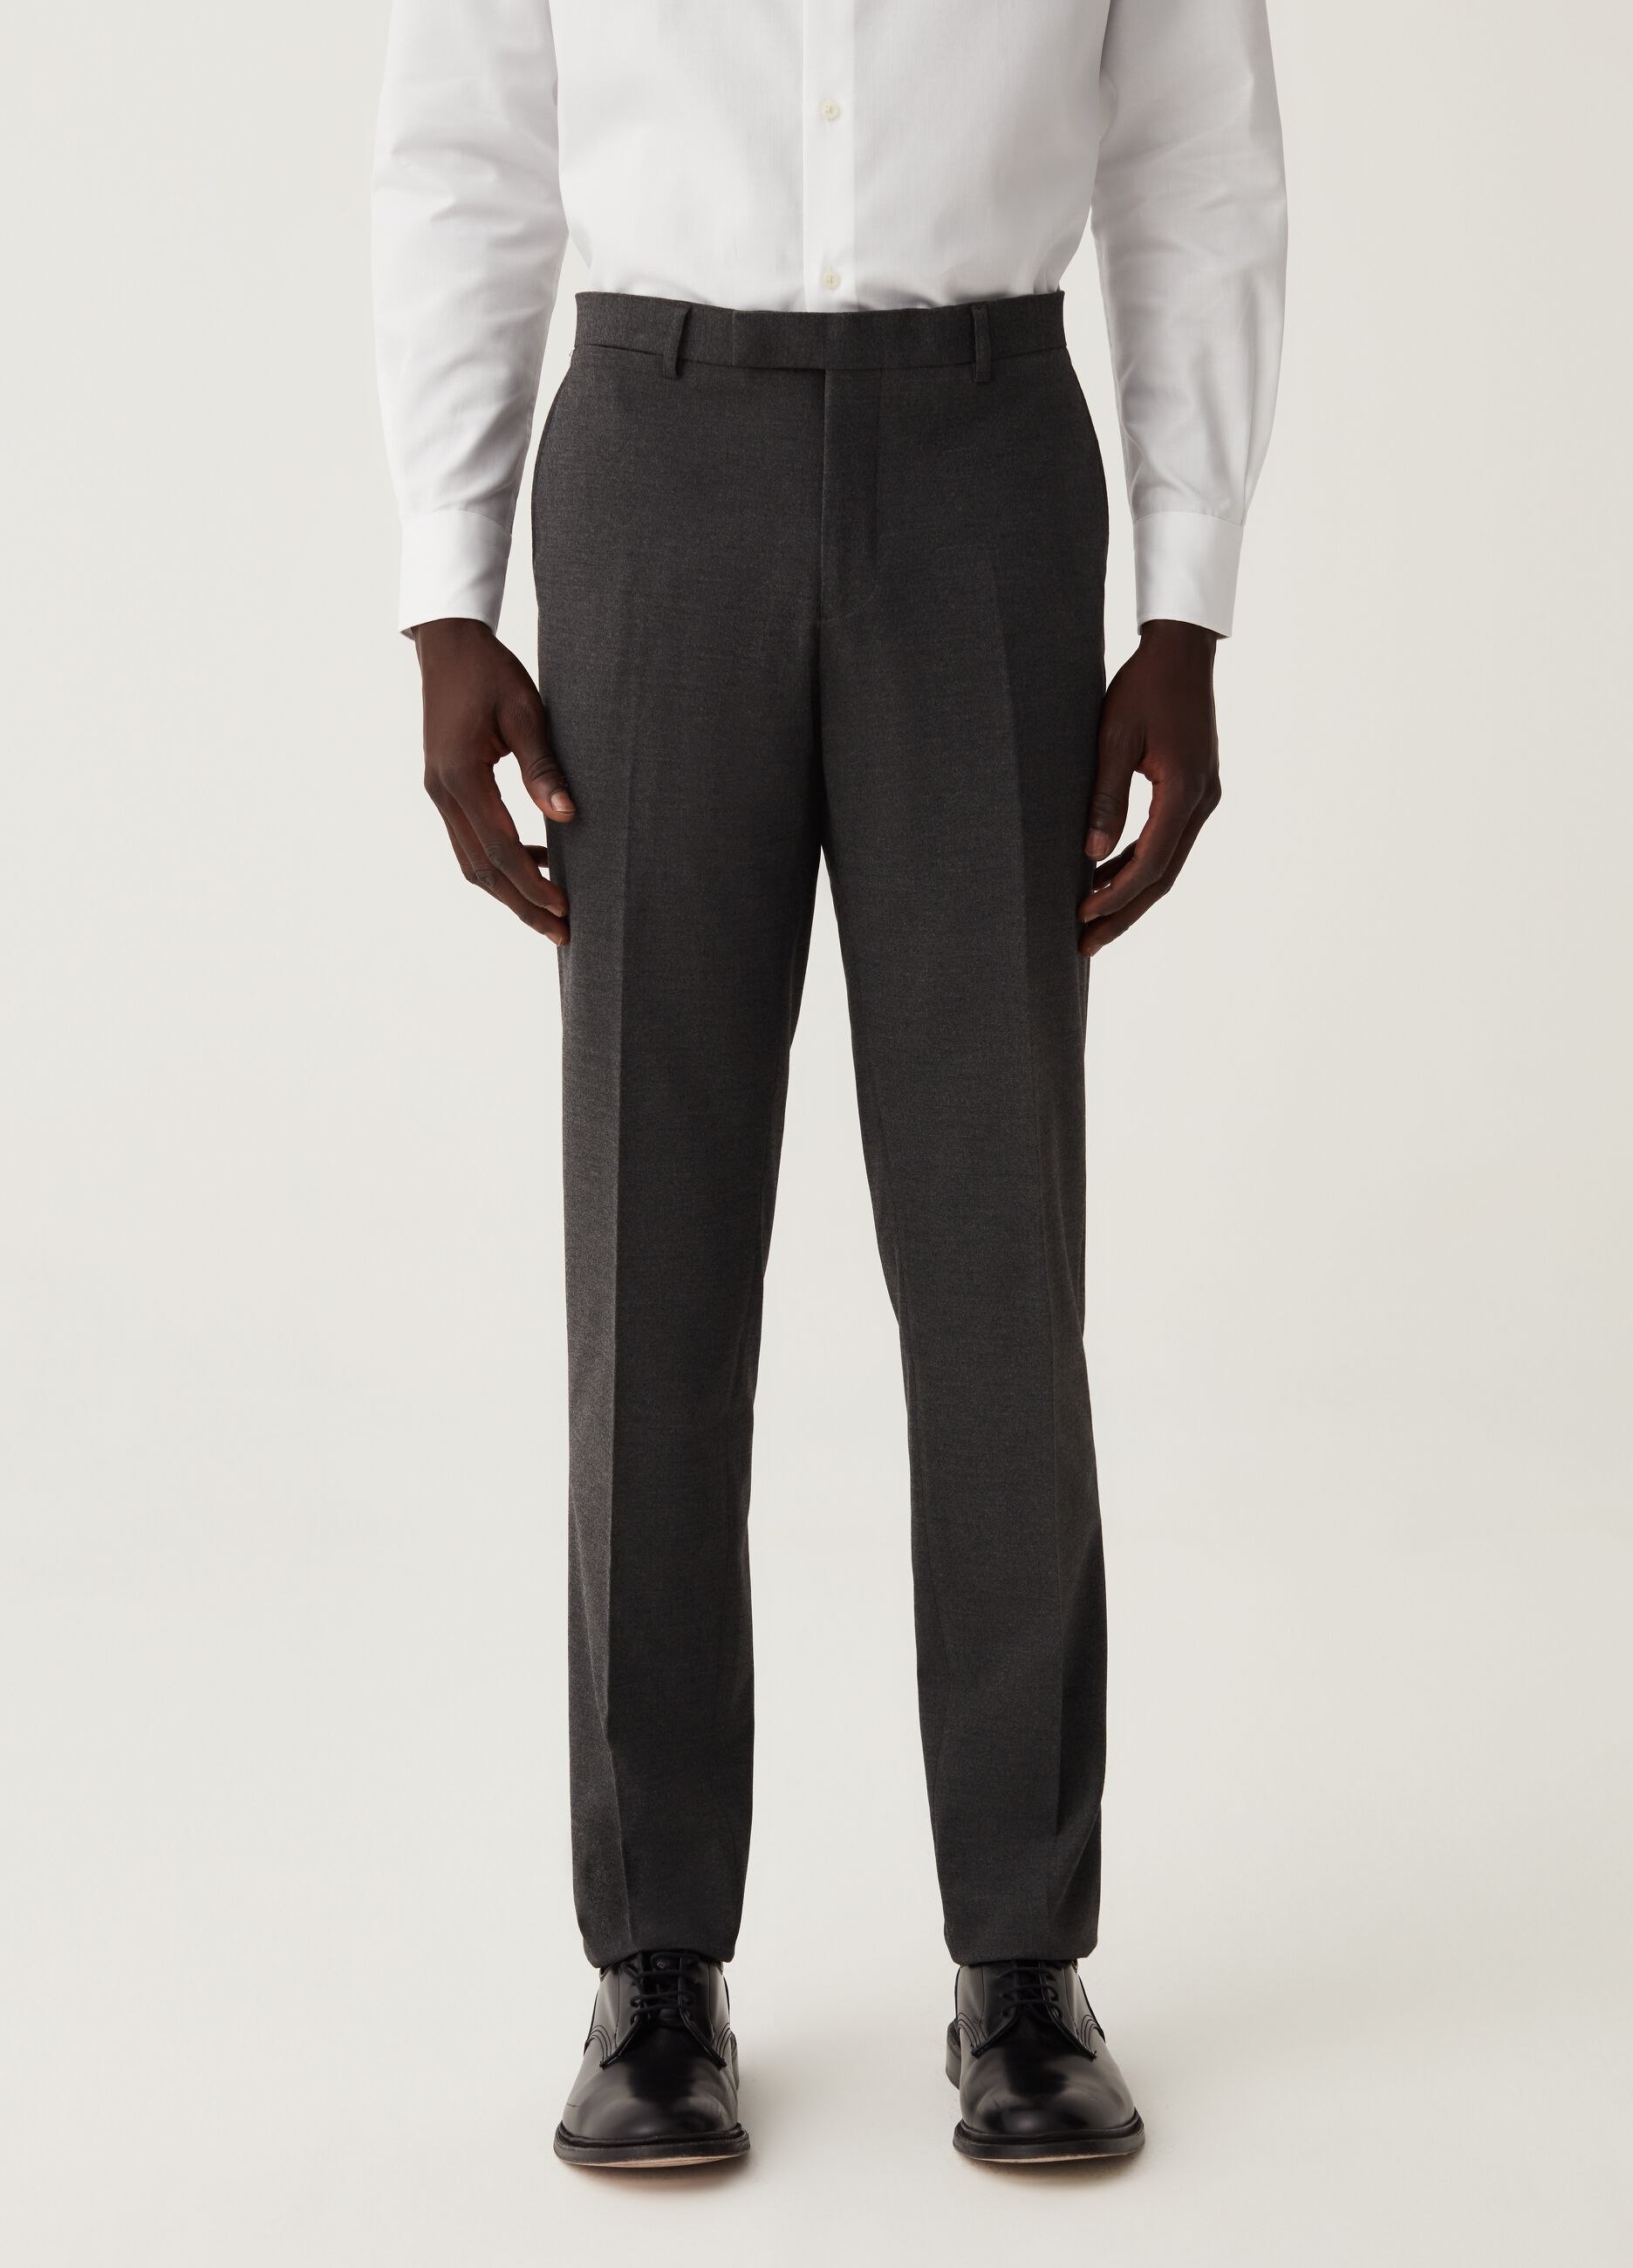 Brick men's elegant trousers DJP70 | Fashionformen.eu